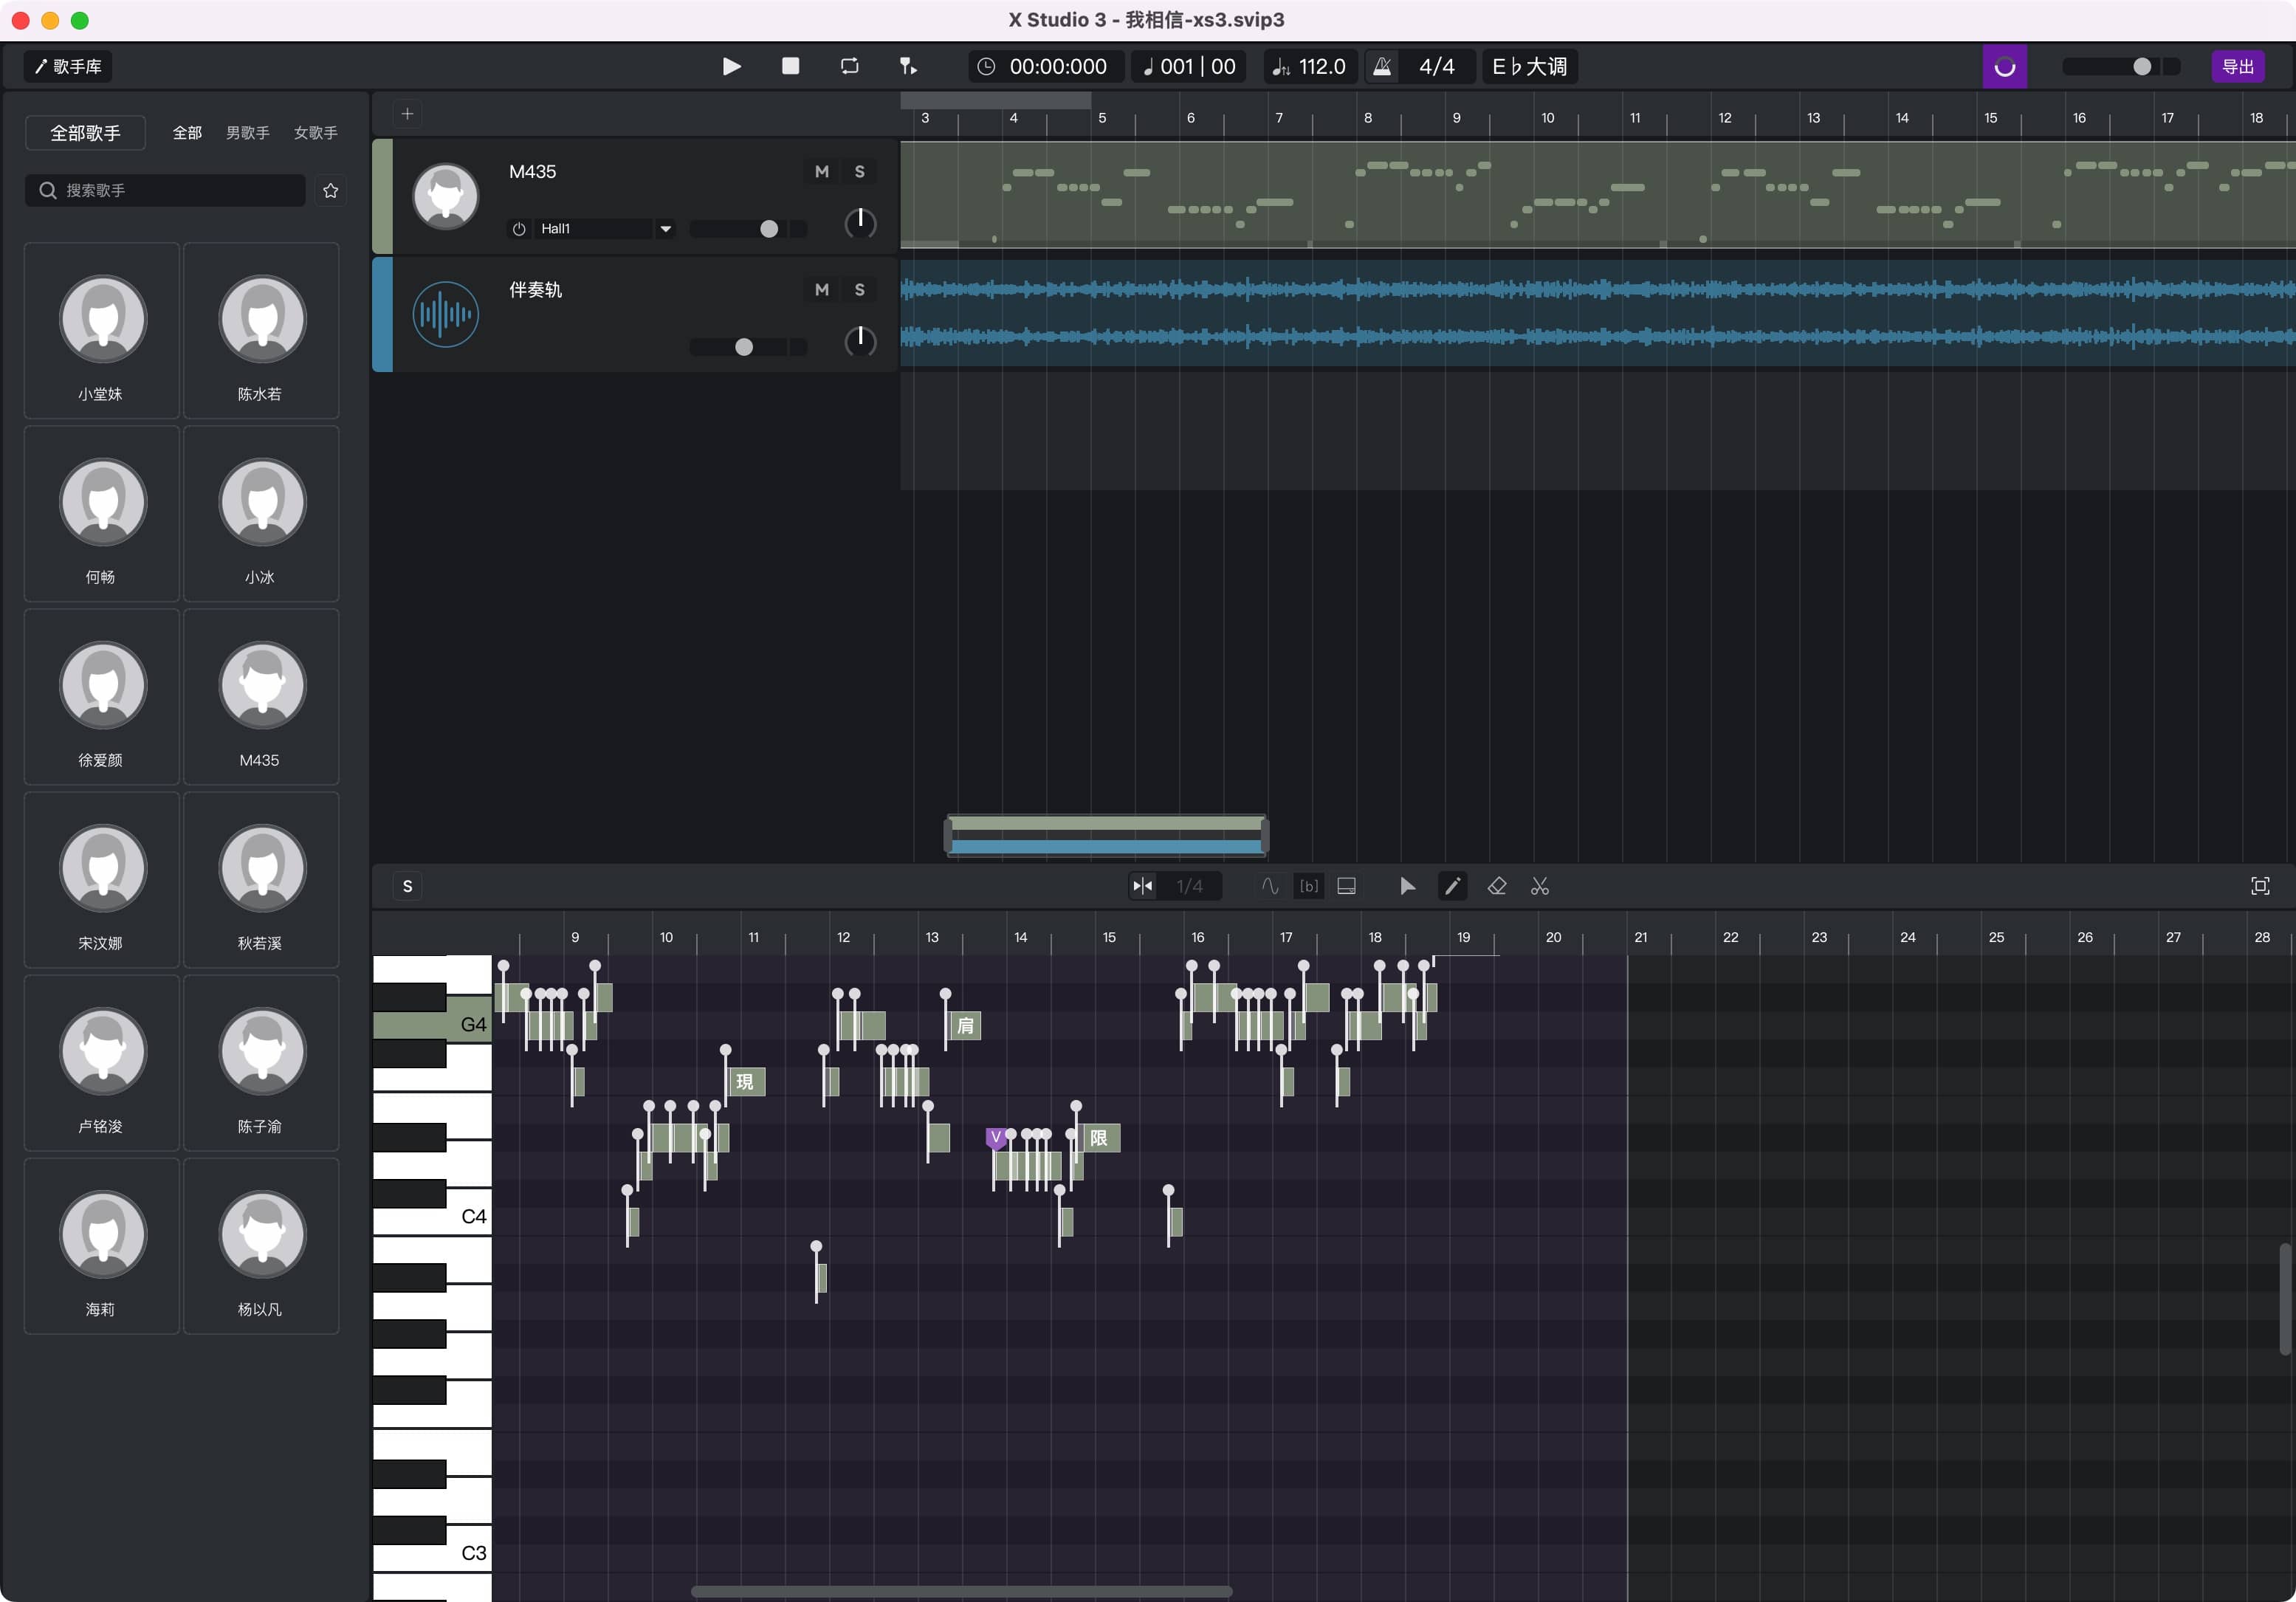 X Studio 3 for mac 3.0.2 AI人声唱歌创作工具